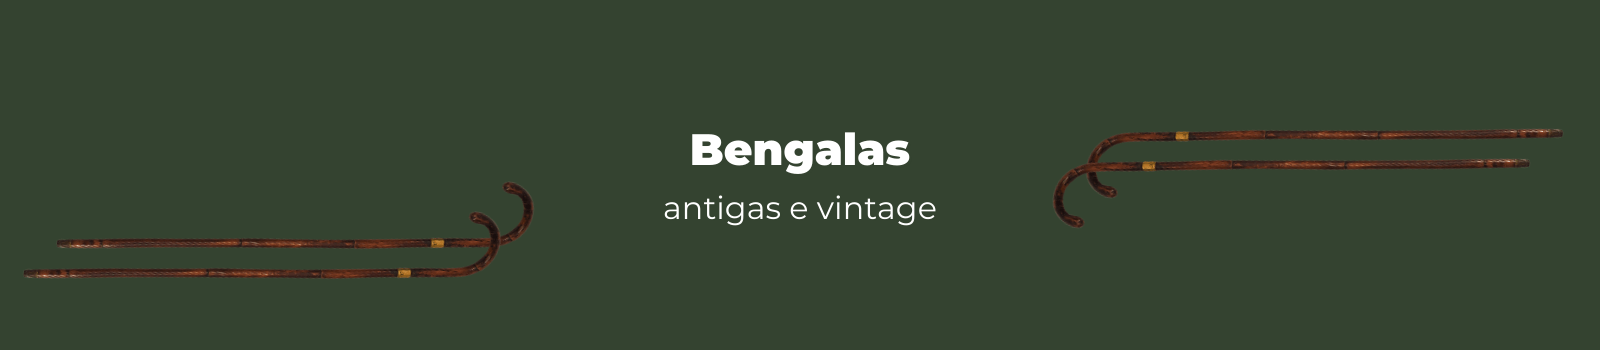 Bengalas Antigas e Vintage